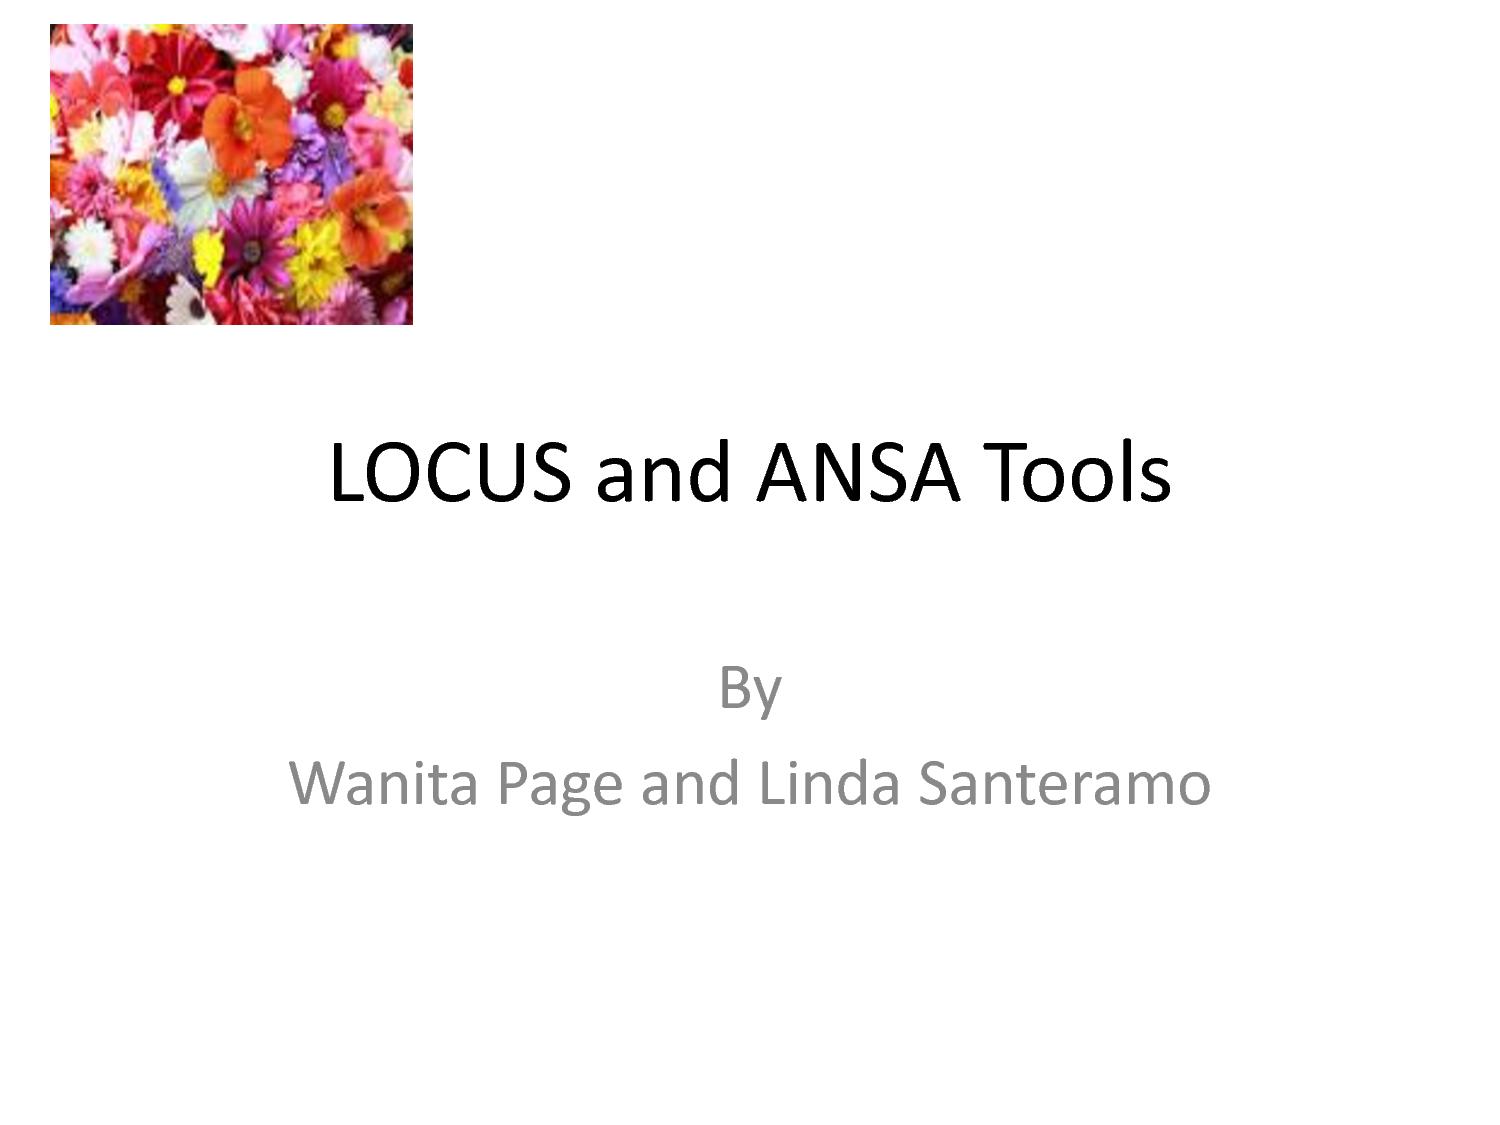 LOCUS and ANSA Tools
 
By 
 
Wanita Page